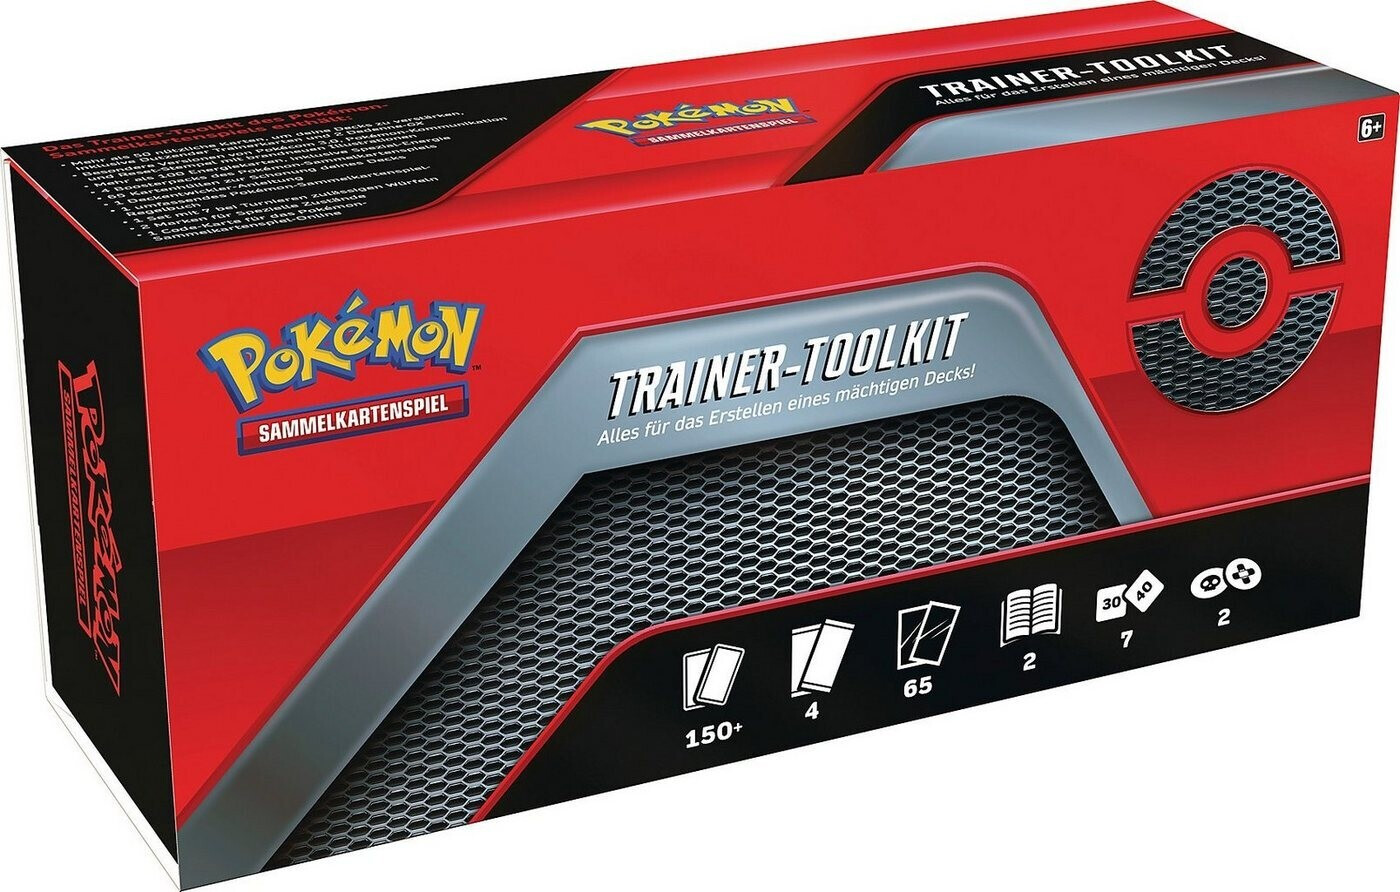 Pokémon TrainerToolkit (45250) ab 59,95 € Preisvergleich bei idealo.de